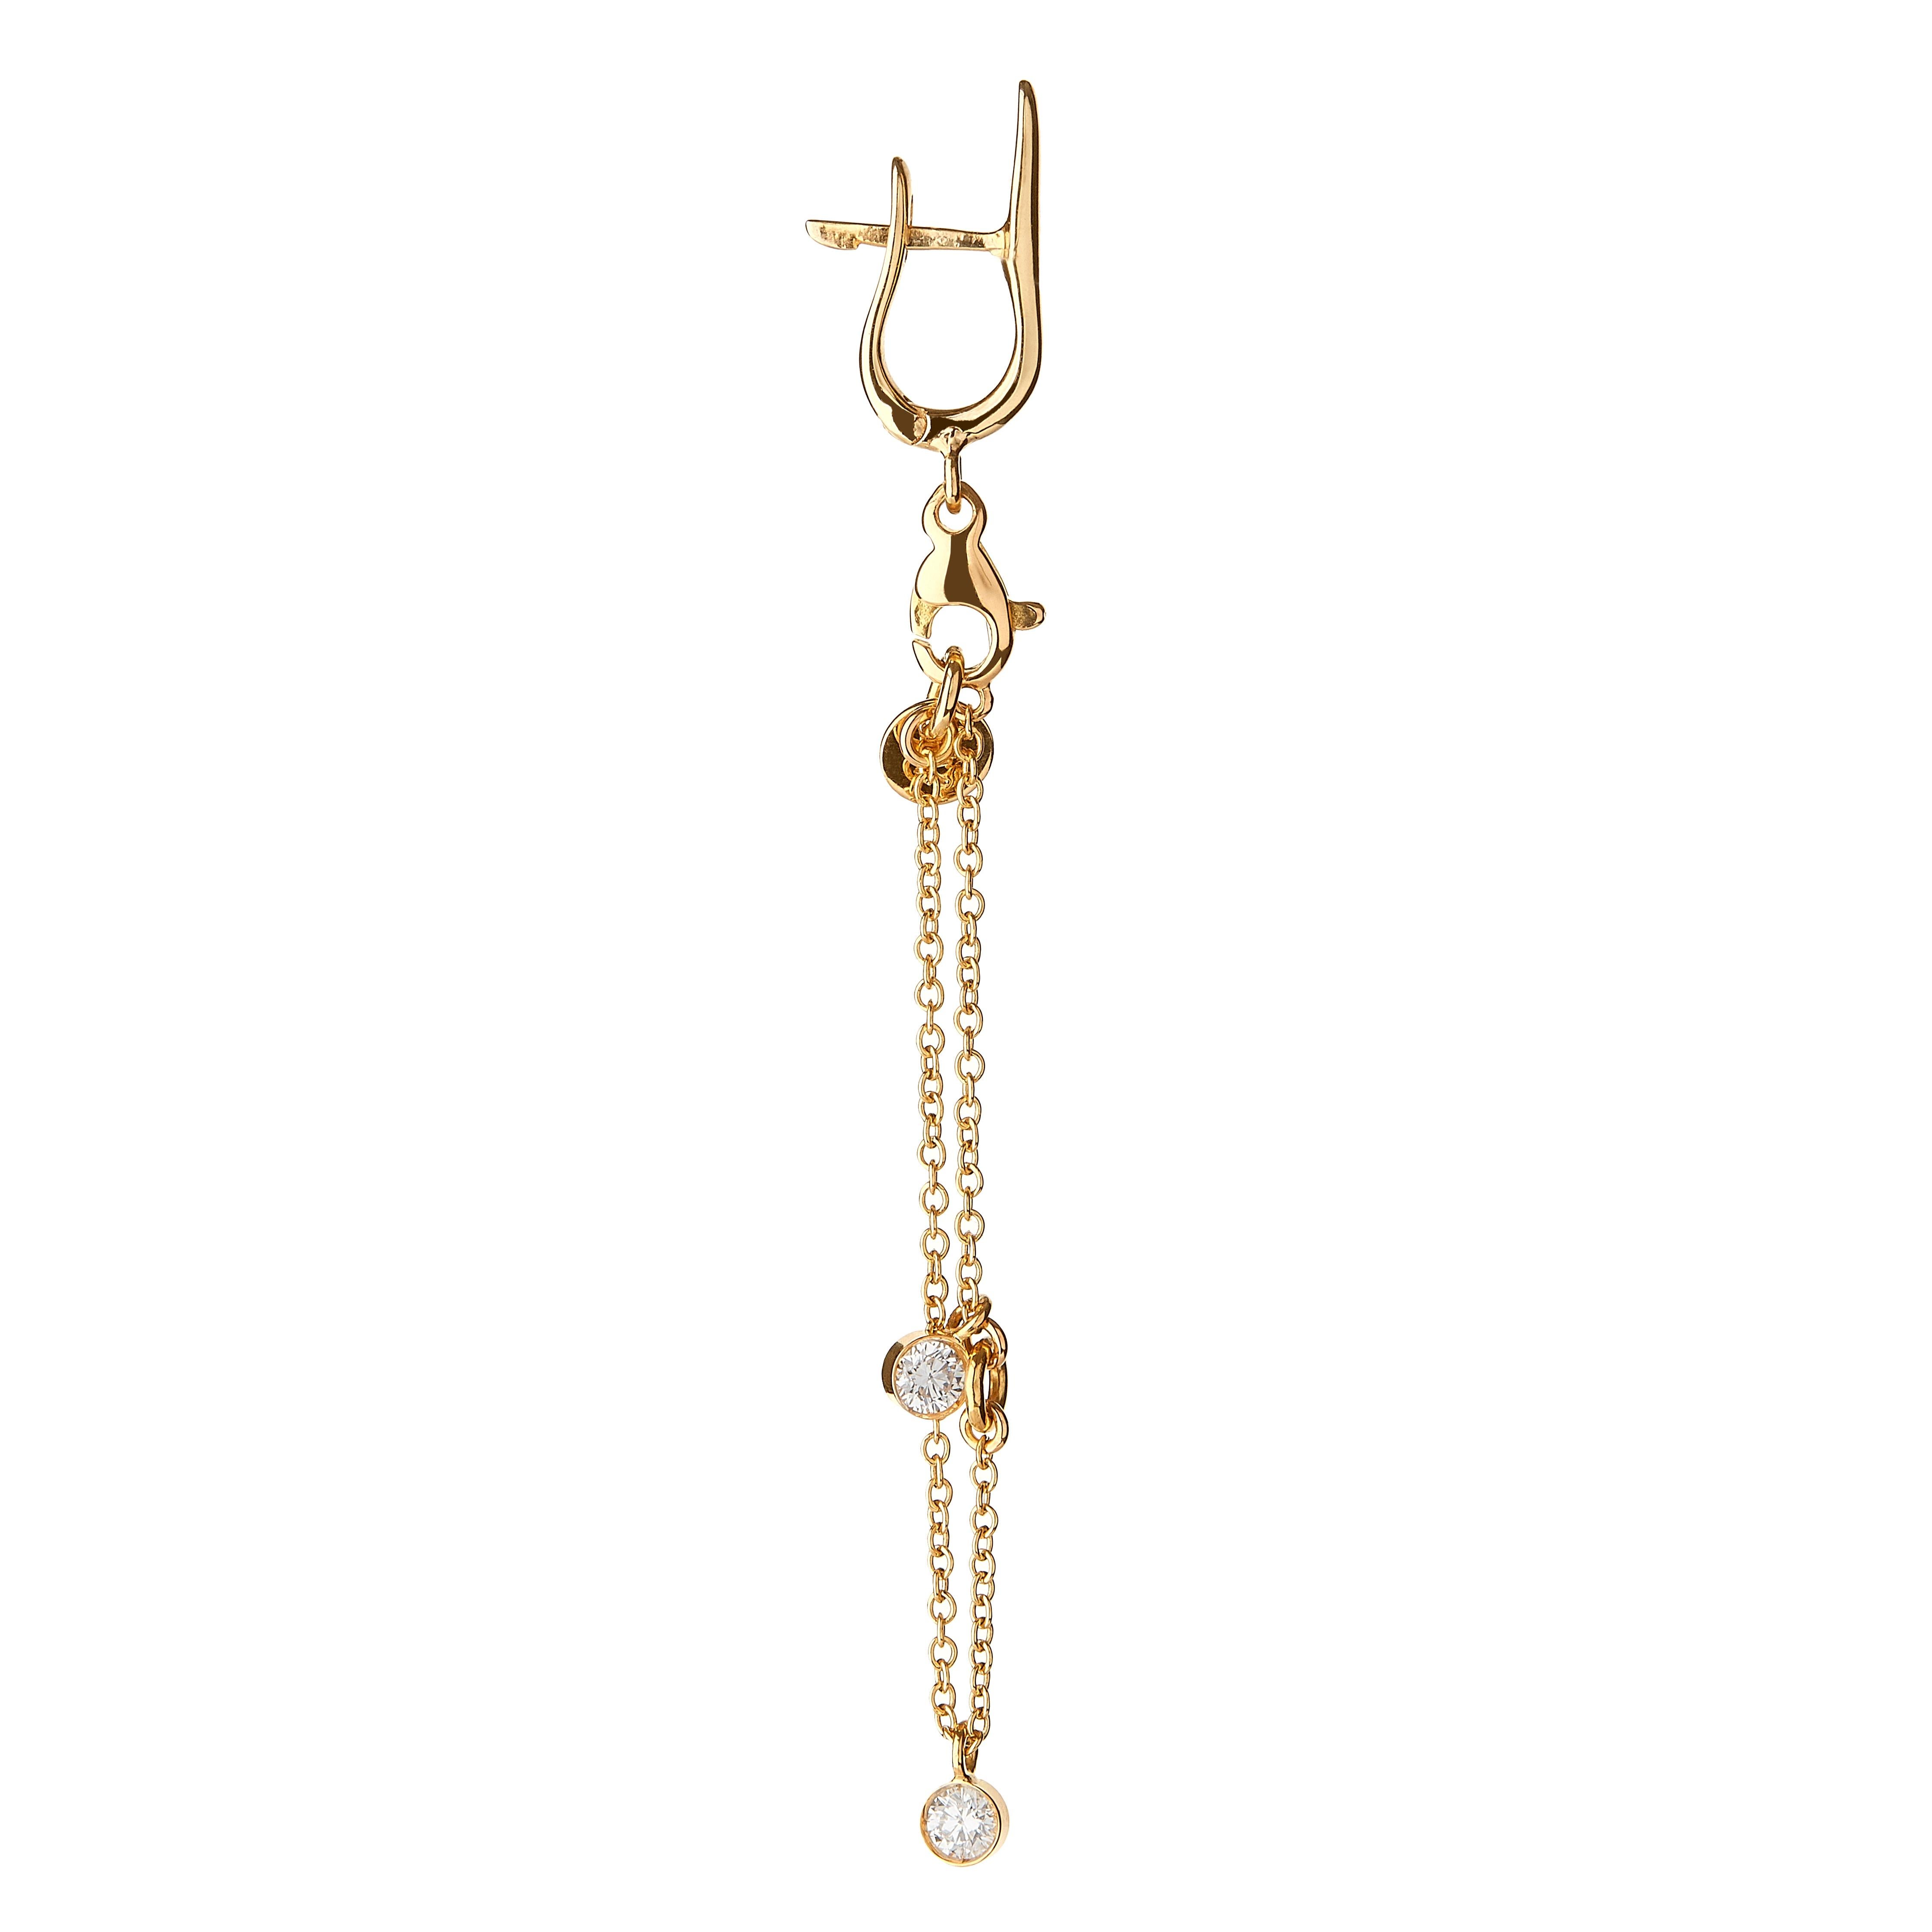 Nathalie Jean Contemporary 0.22 Carat Diamond Gold Pendant Drop Earring For Sale 2